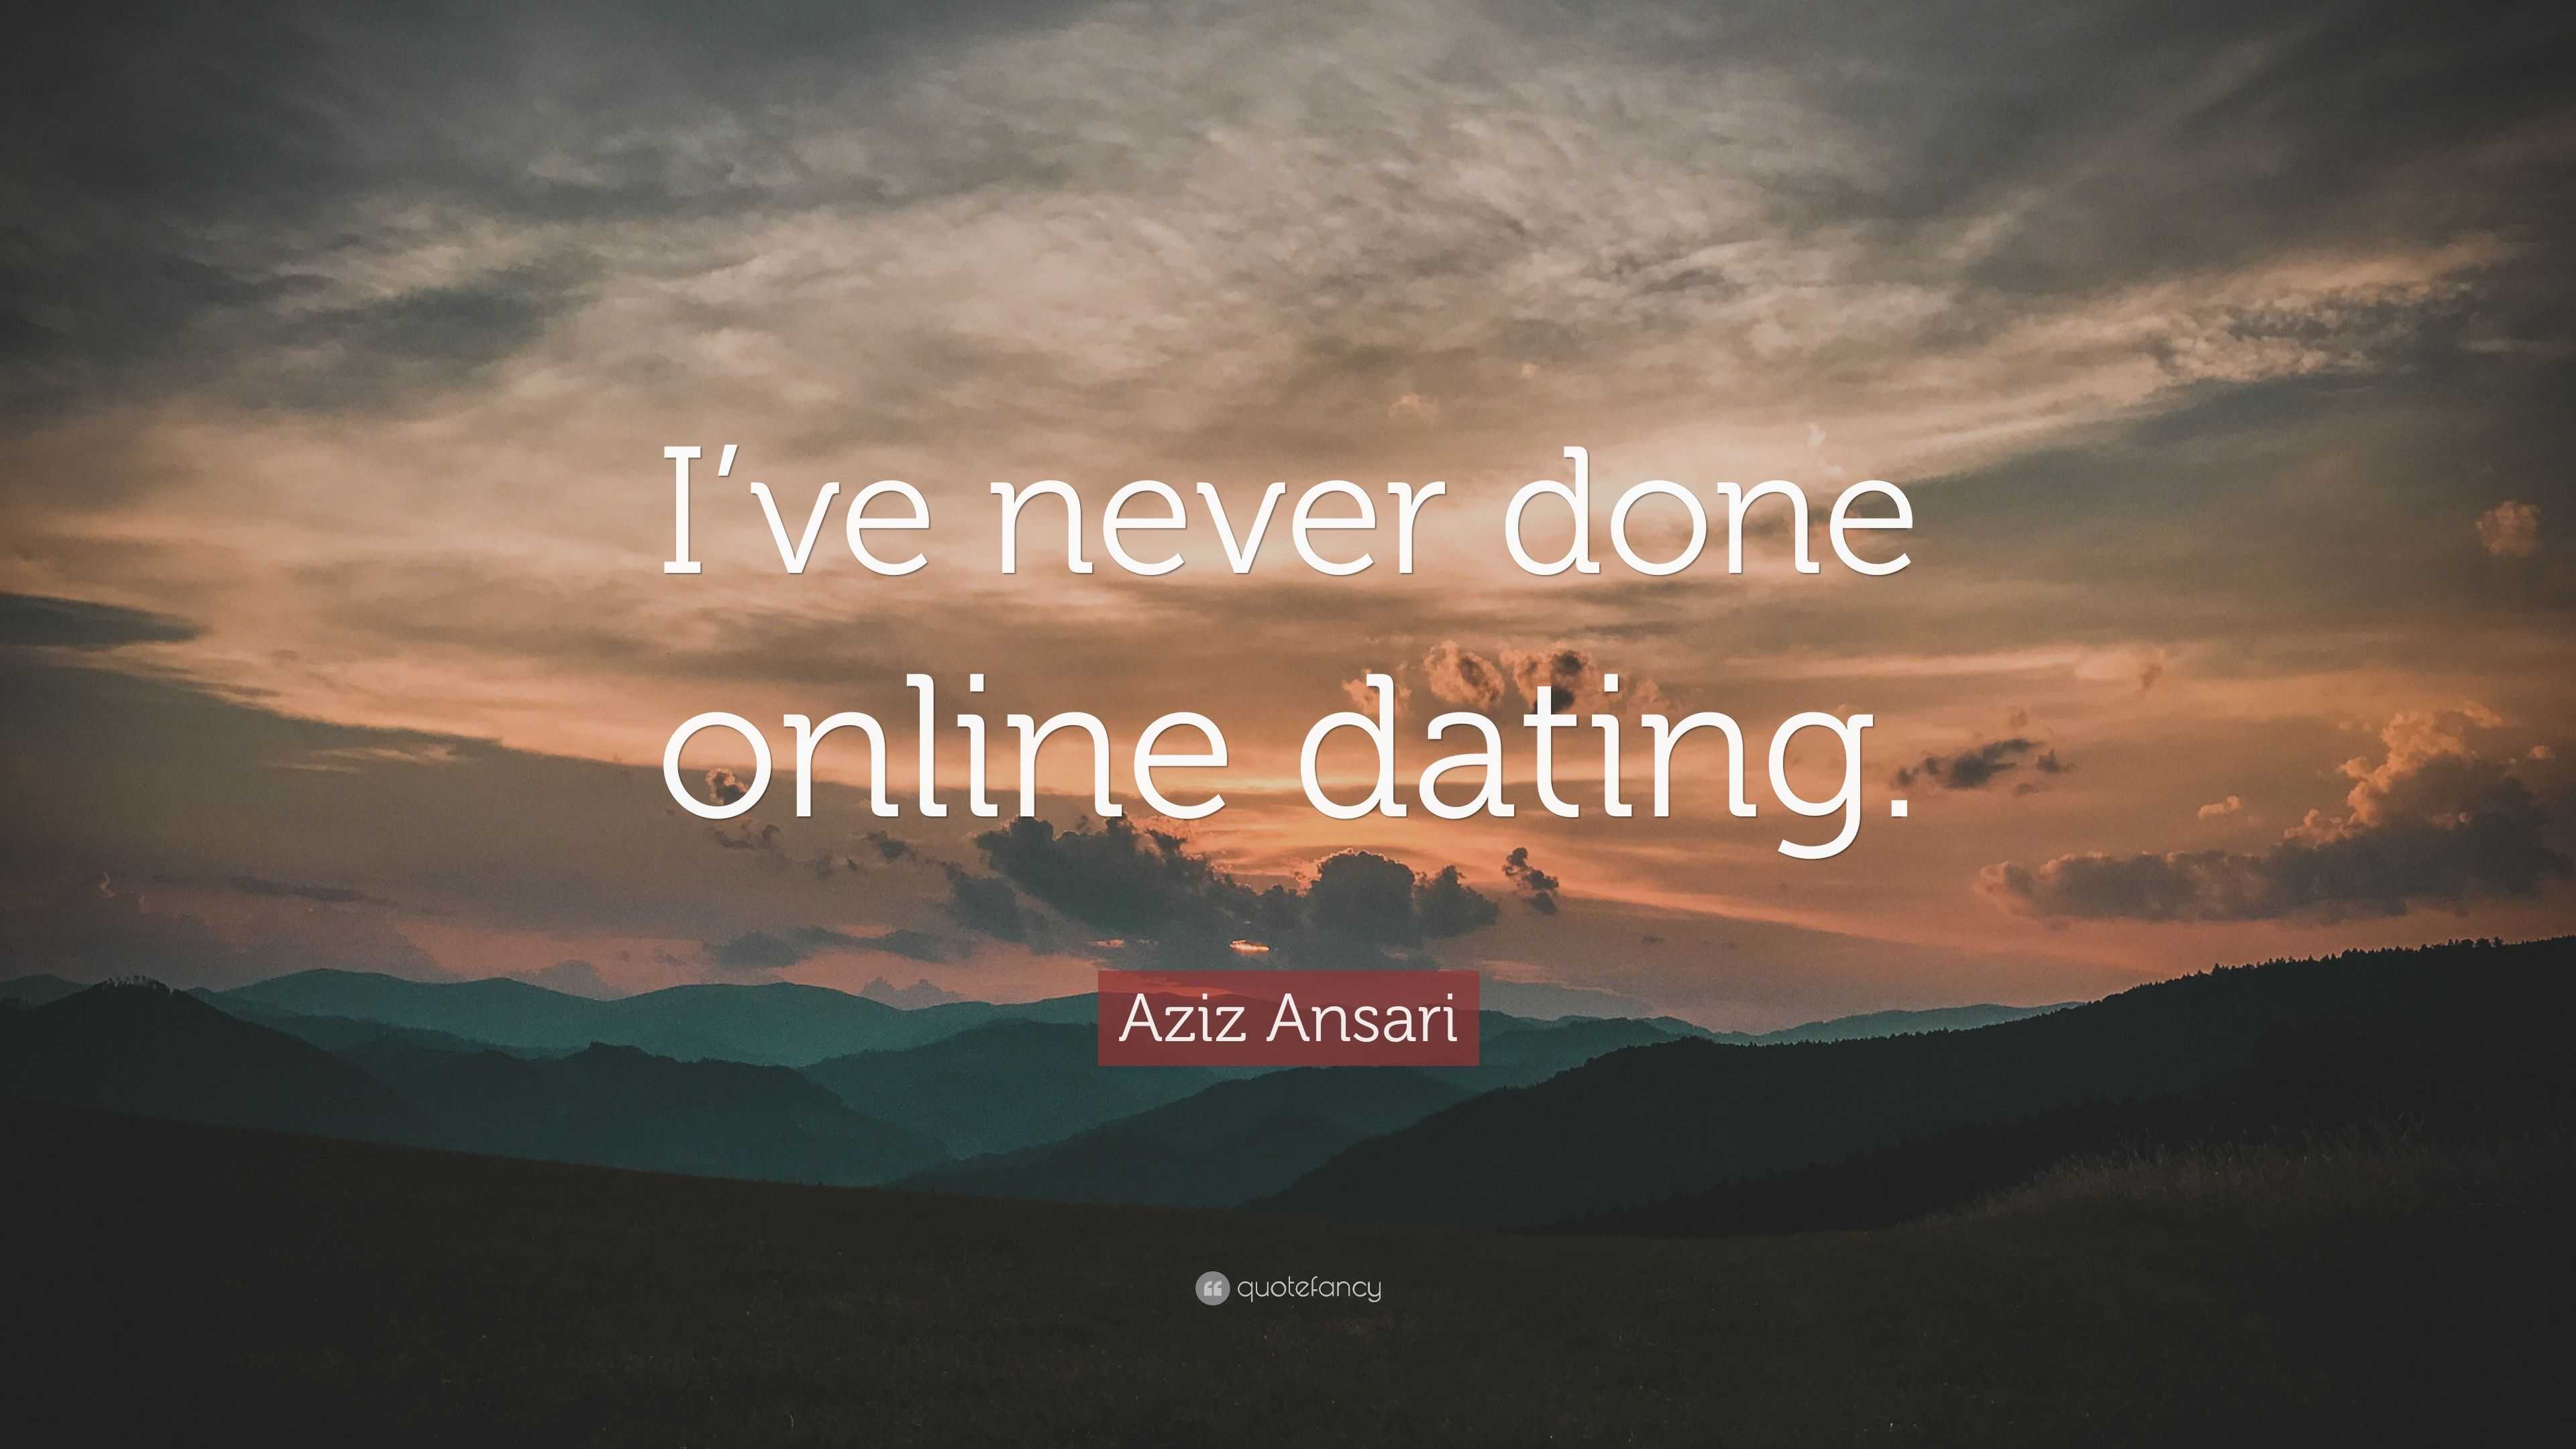 Online dating Aziz Ansari